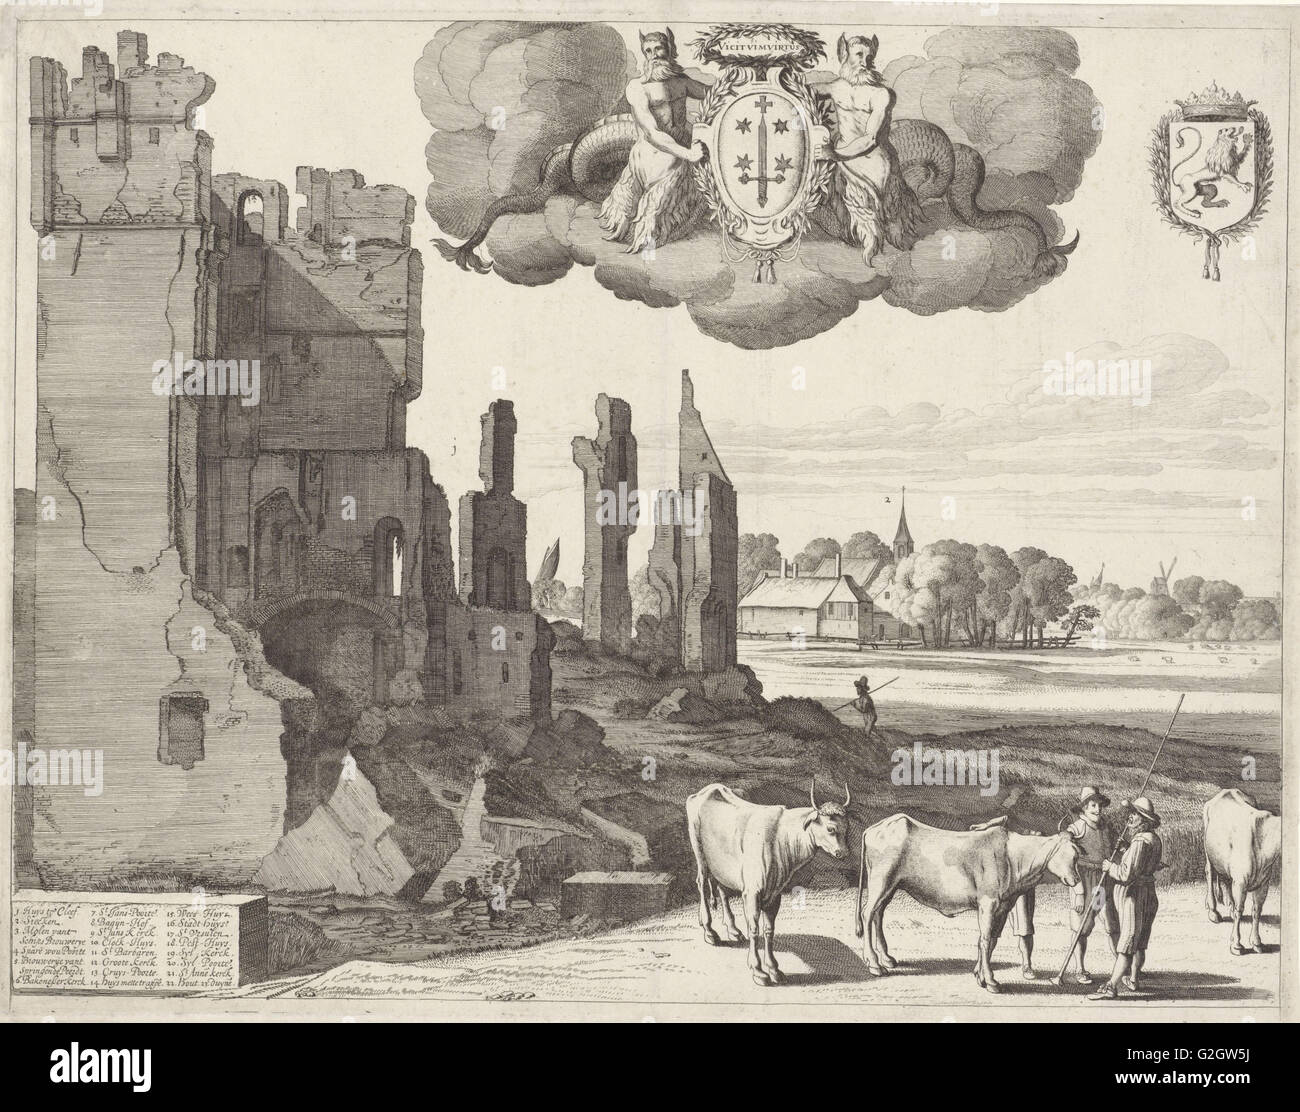 Vista di Haarlem, Paesi Bassi, Paesi Bassi, Jan van de Velde (II), Pieter de Molijn, Reinier & Josua Ottens, 1625 - 1651 Foto Stock